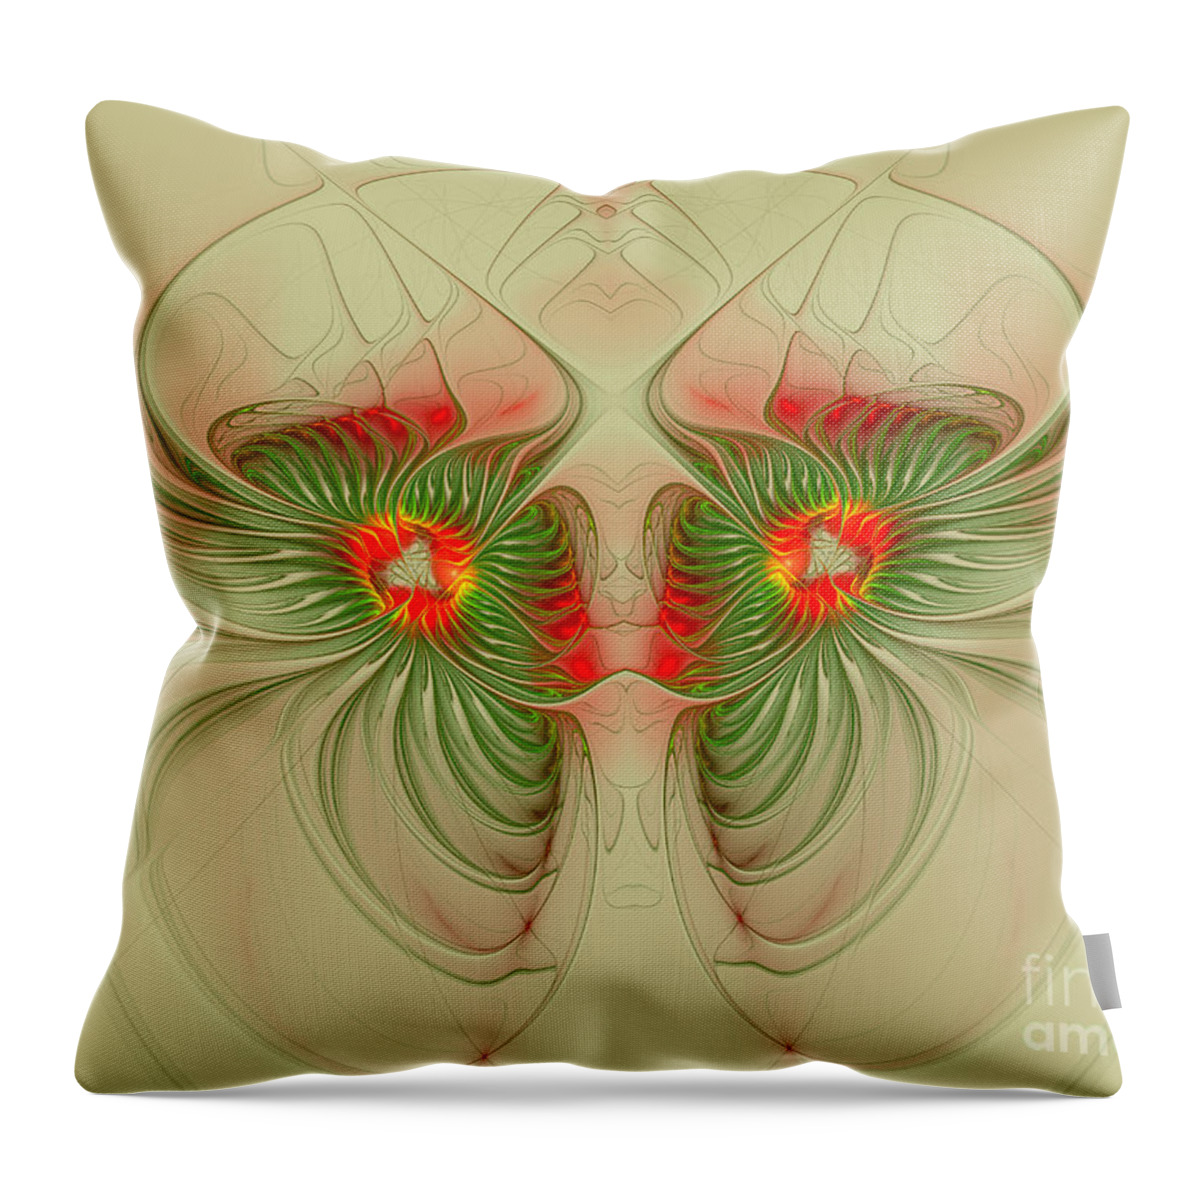 Digital Throw Pillow featuring the digital art Inner Vision by Deborah Benoit